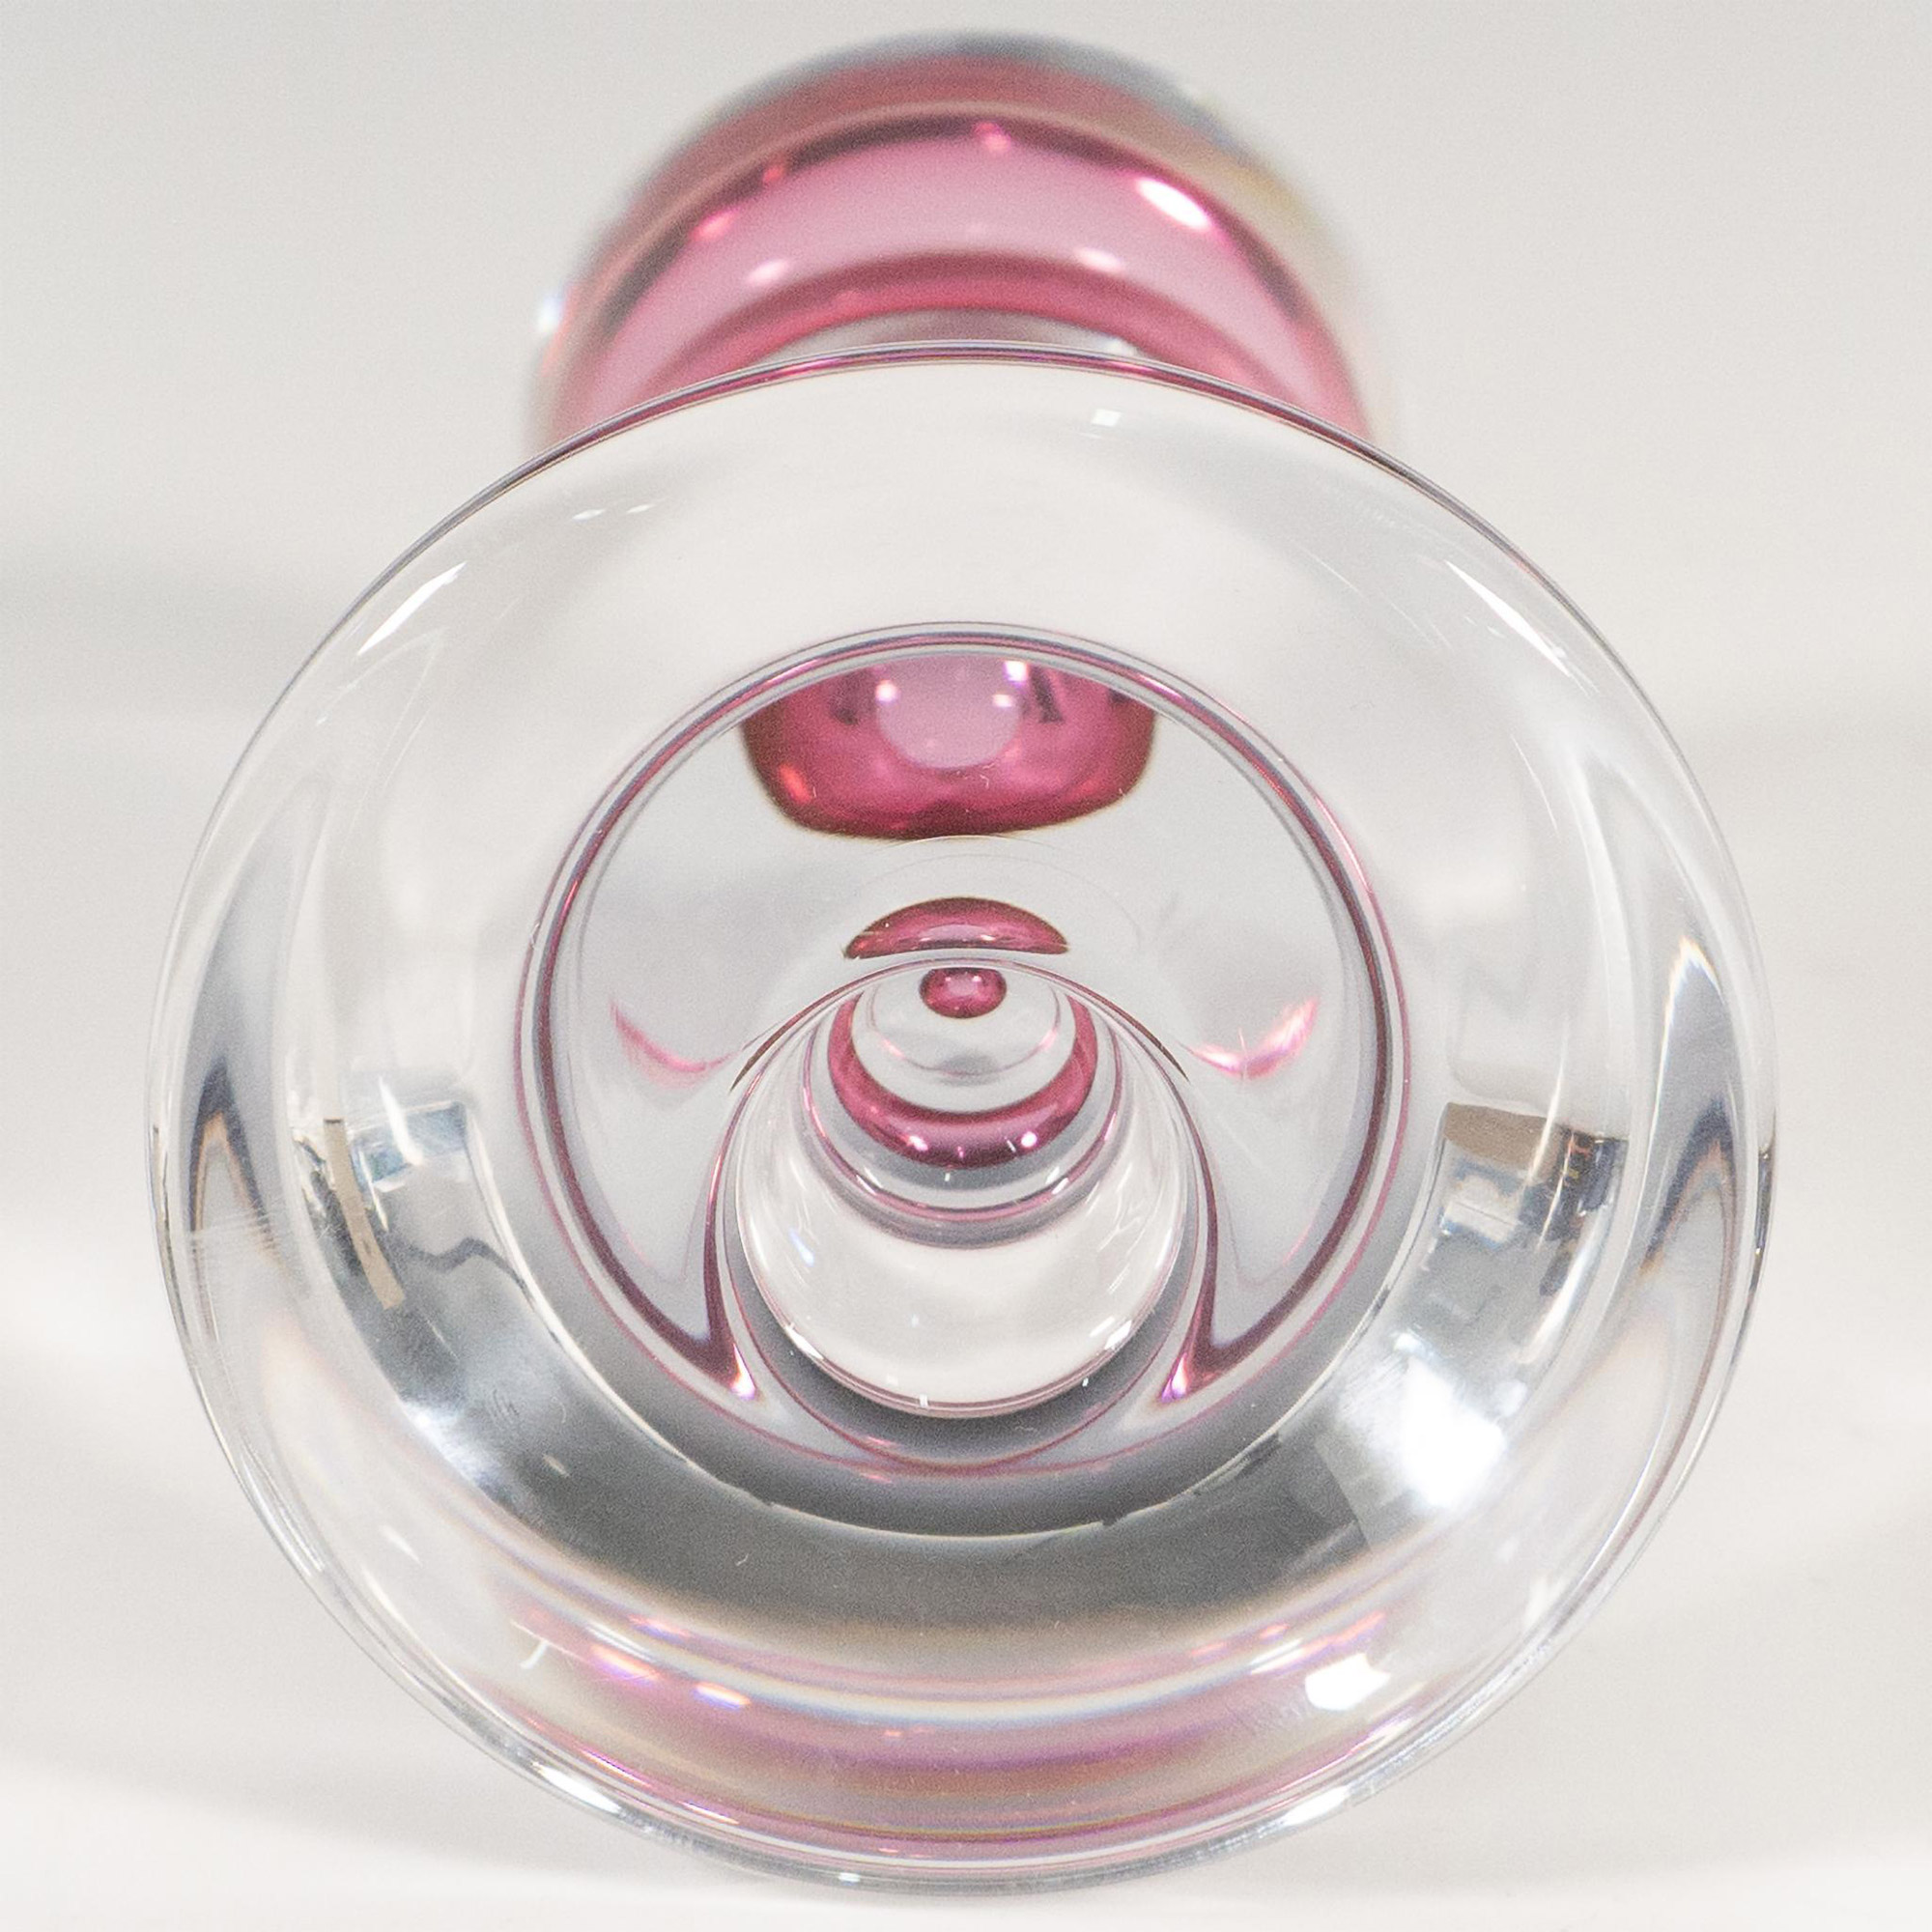 Kosta Boda by Goran Warff Glass Candlestick Holder, Zoom - Image 5 of 5